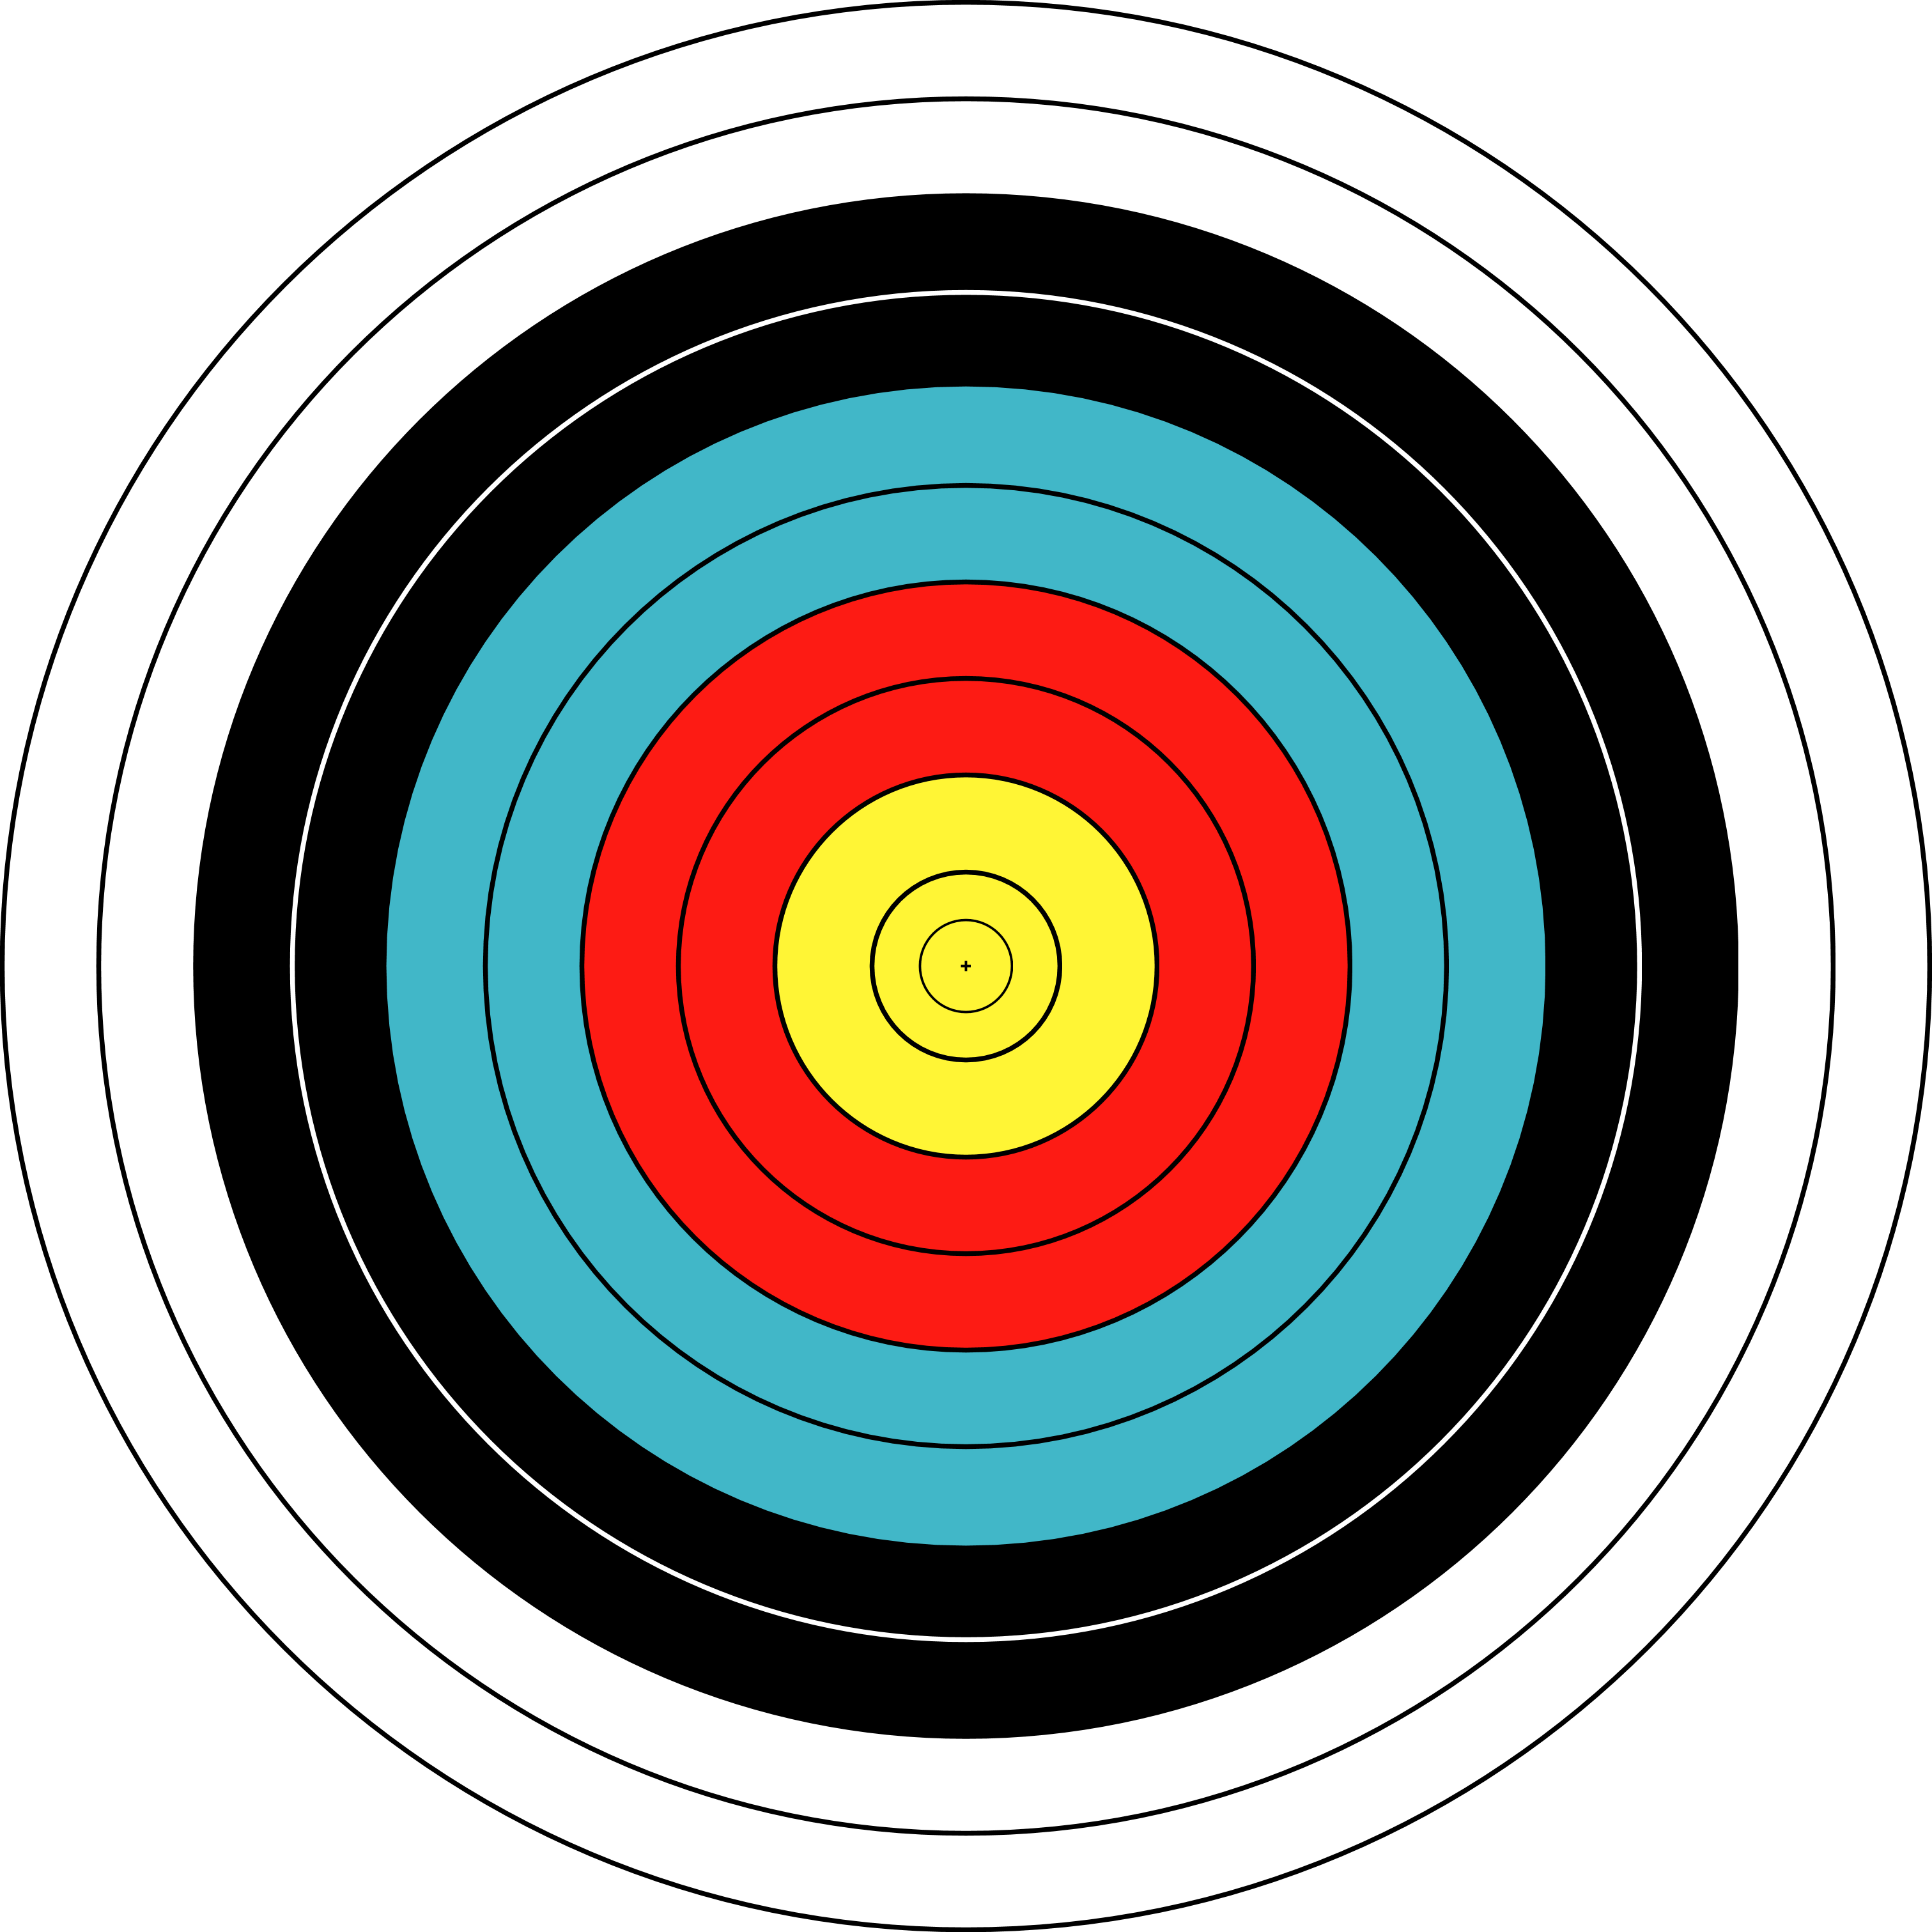 Bullseye Detection - Target For Bow And Arrow (3023x3023)